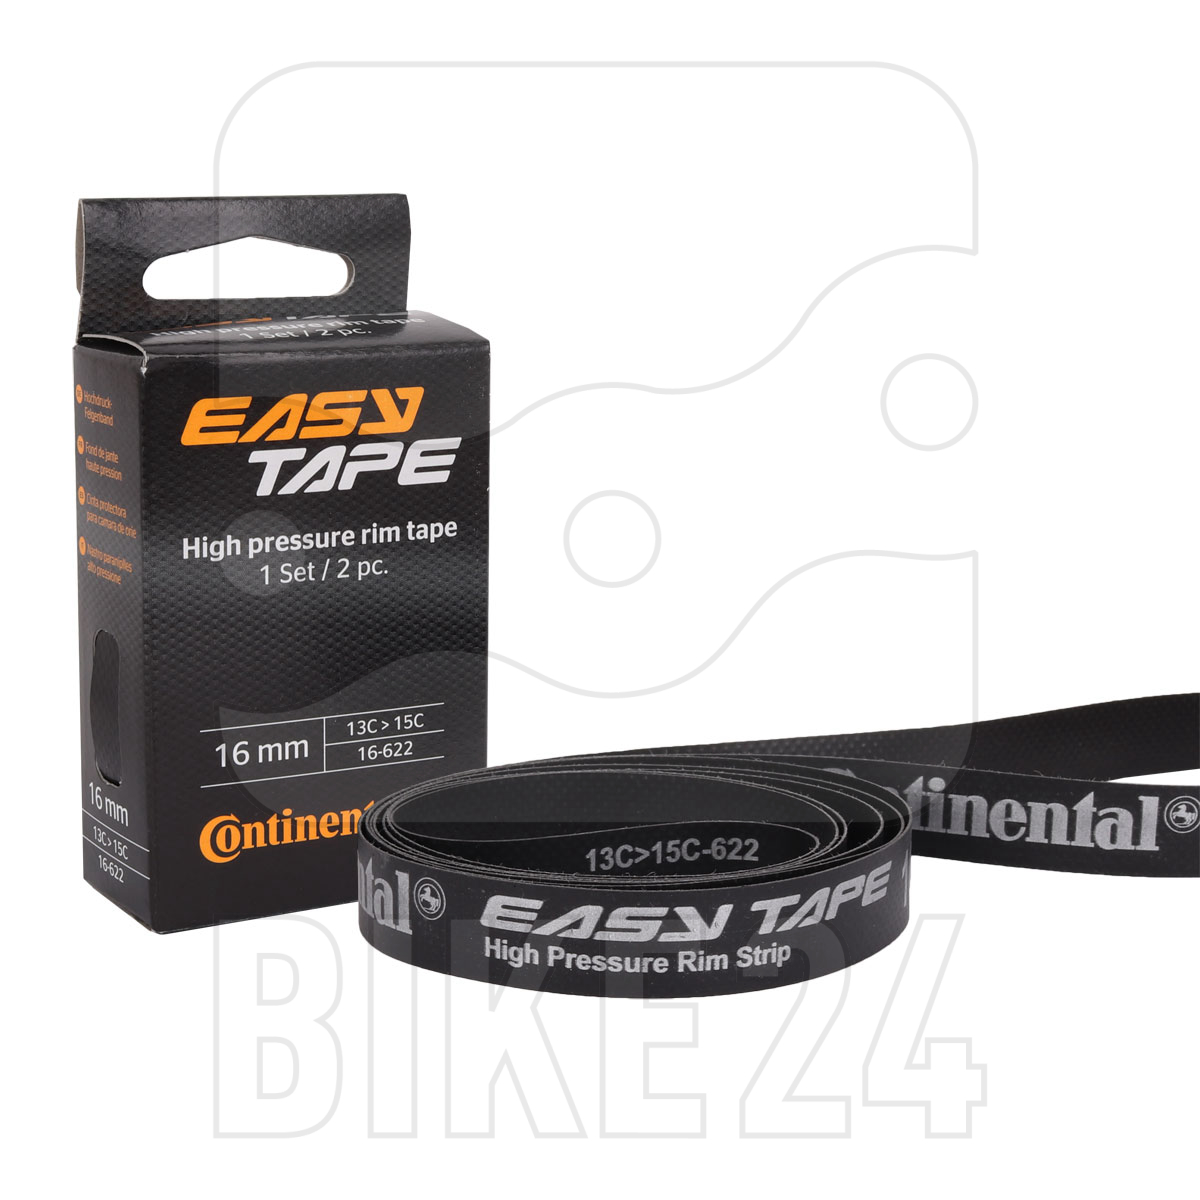 Photo produit de Continental Easy Tape High Pressure Rim Tape up to 15 bar - 2 pieces